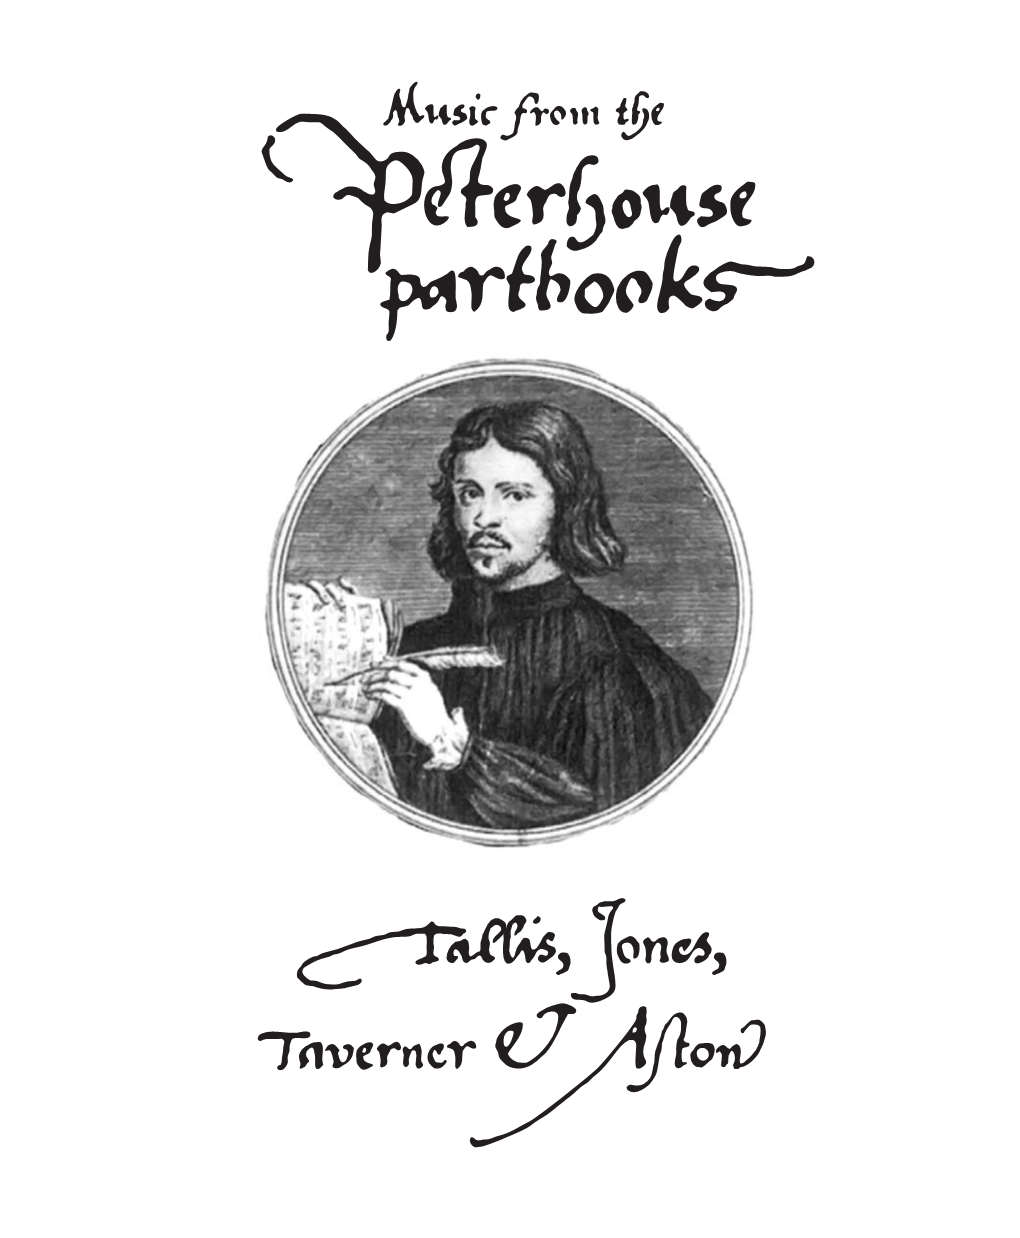 Peterhouse Partbooks